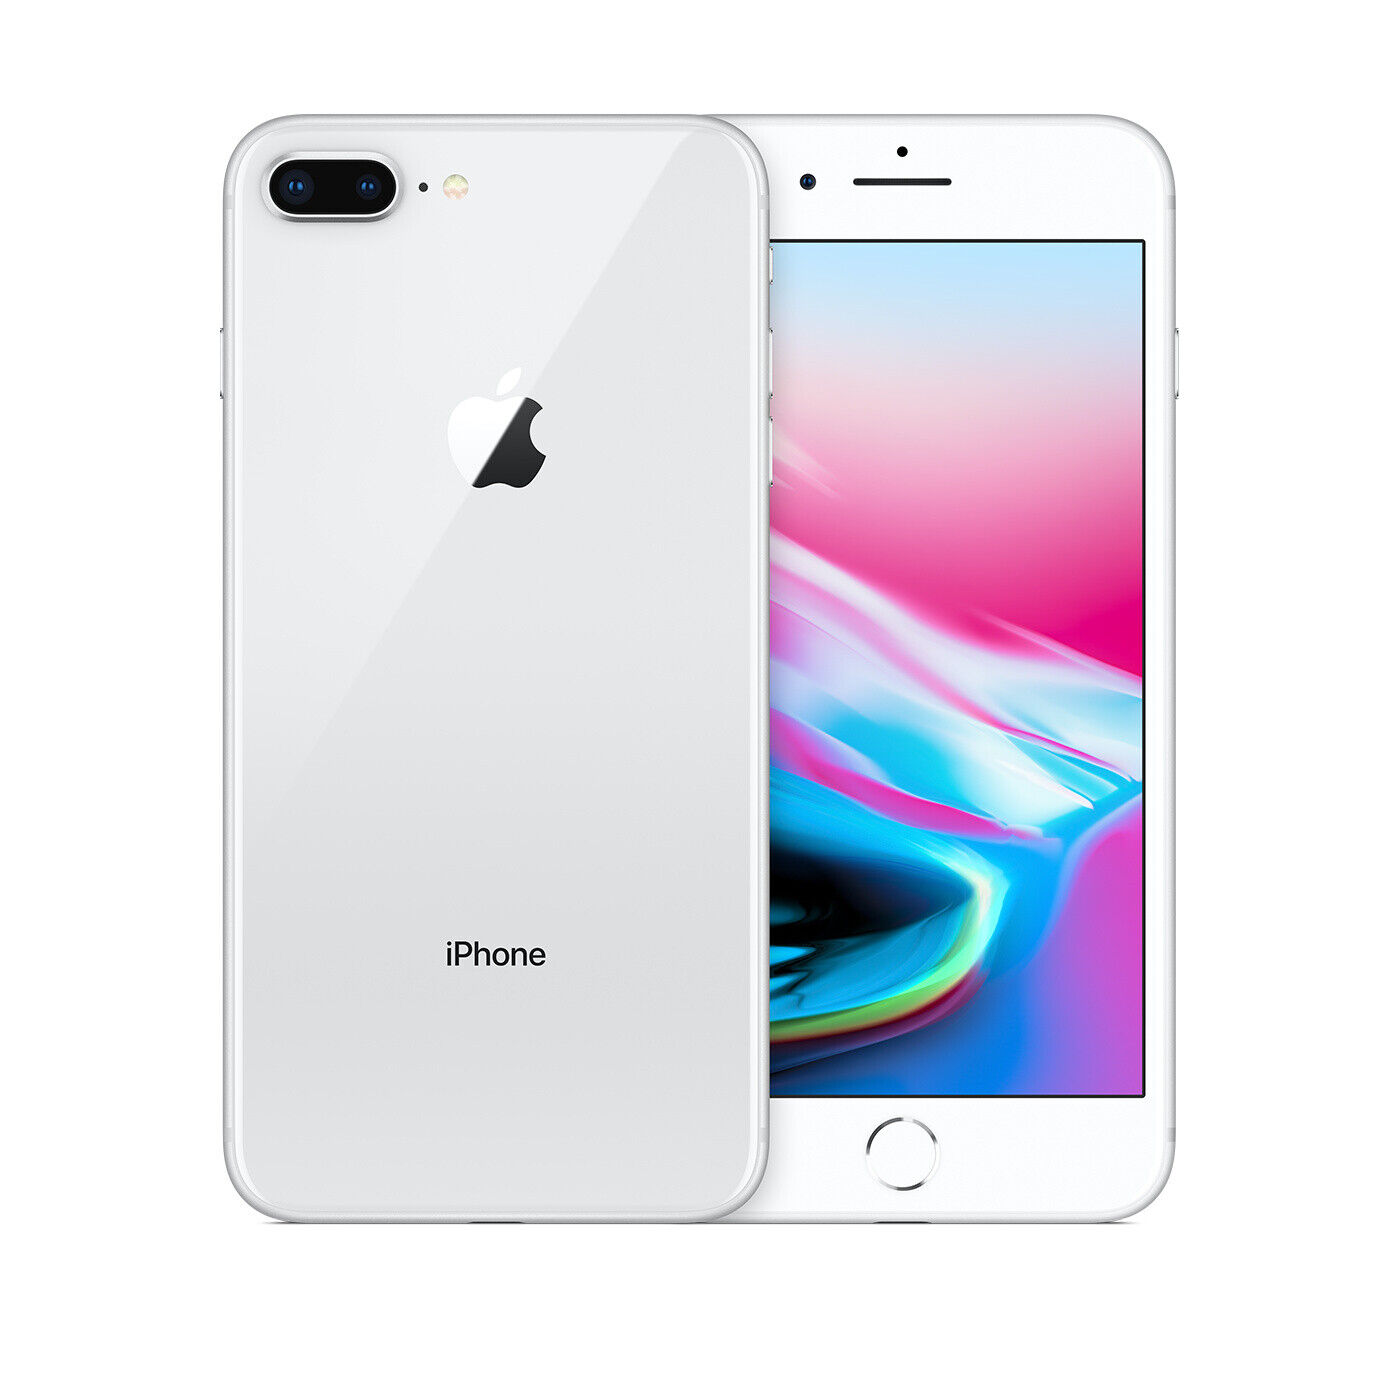 Apple iPhone 8 Plus - 256GB - Silver - (Unlocked) - A Very Good